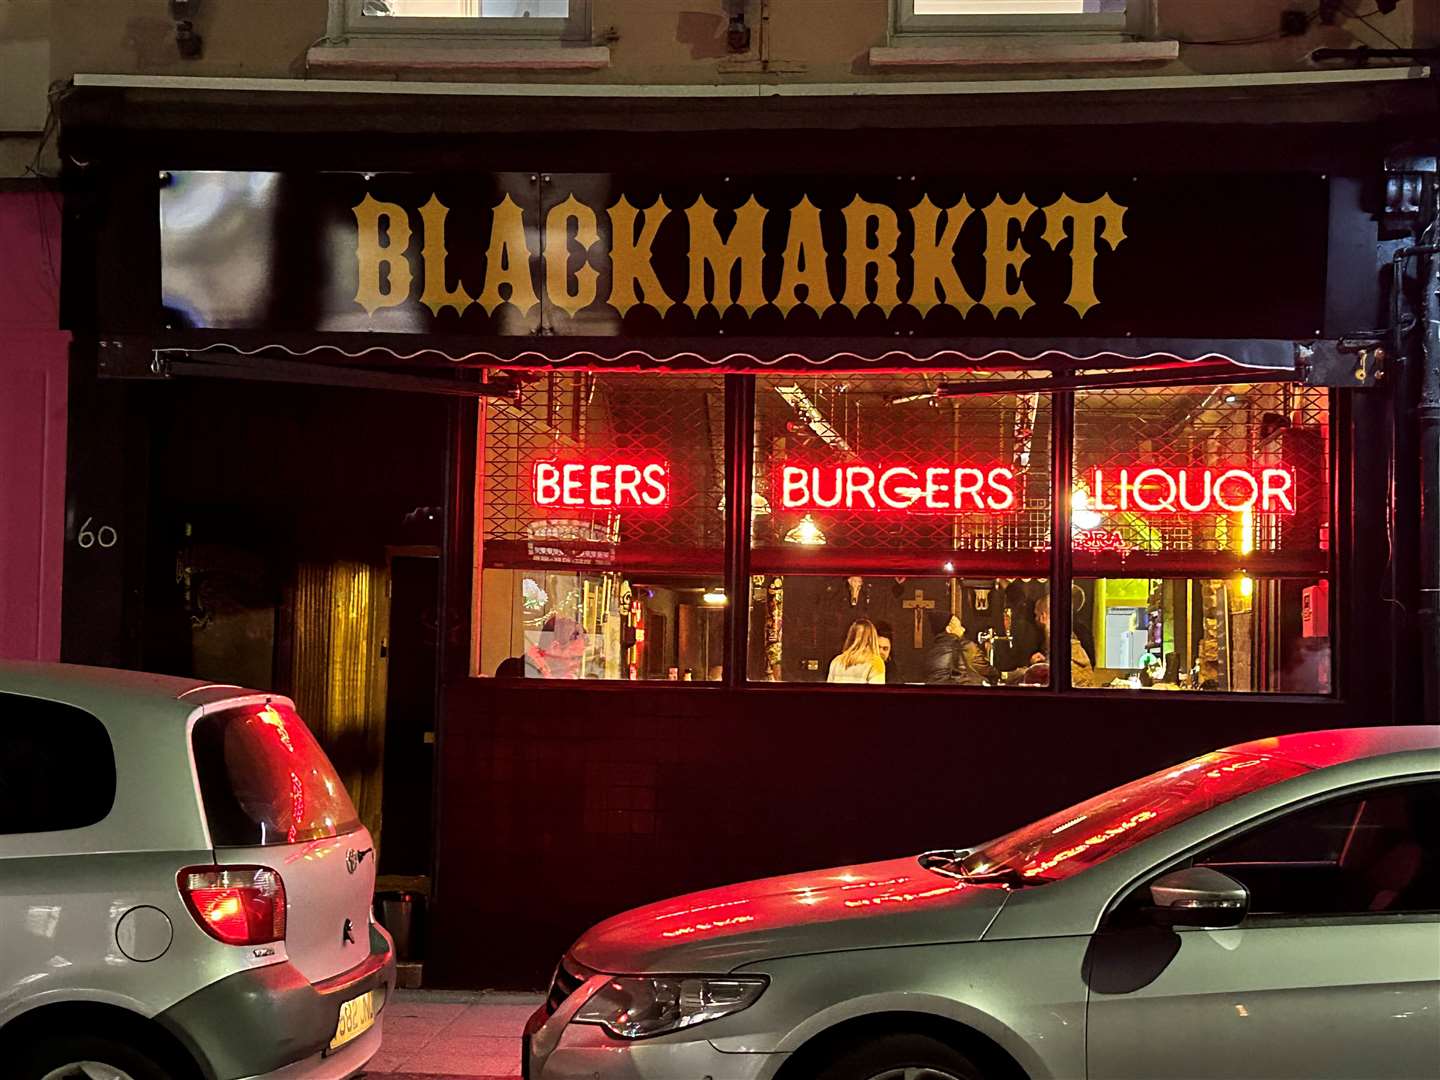 New dive bar Blackmarket in Tontine Street, Folkestone, opened last month